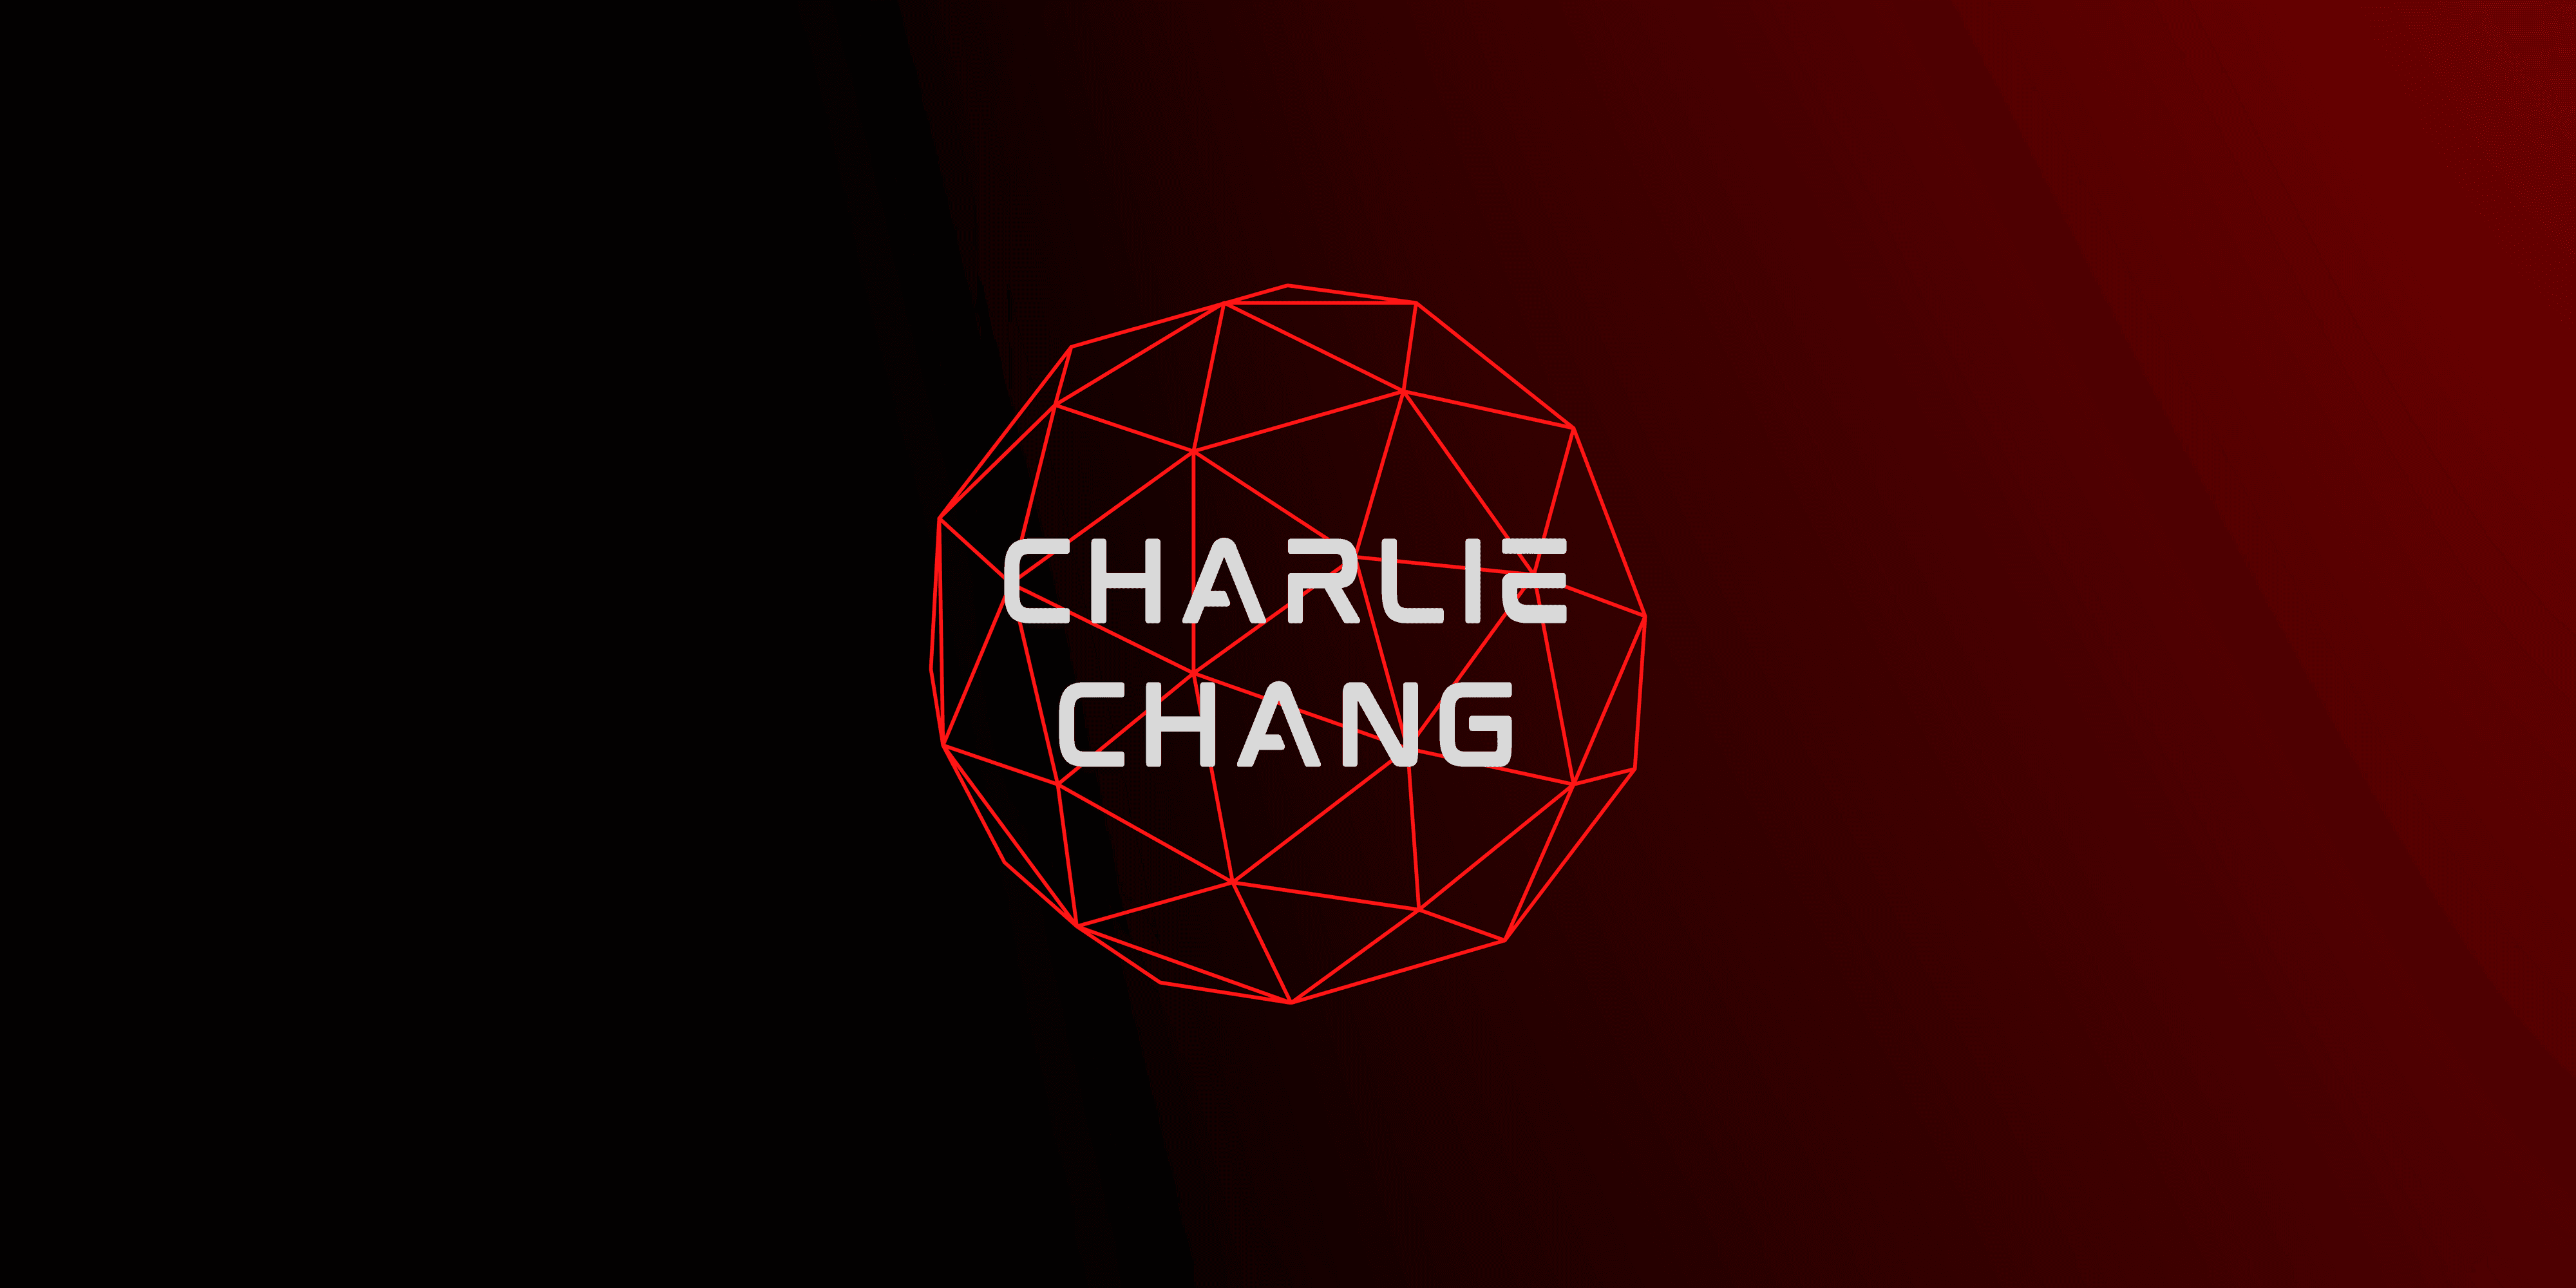 CharlieChang